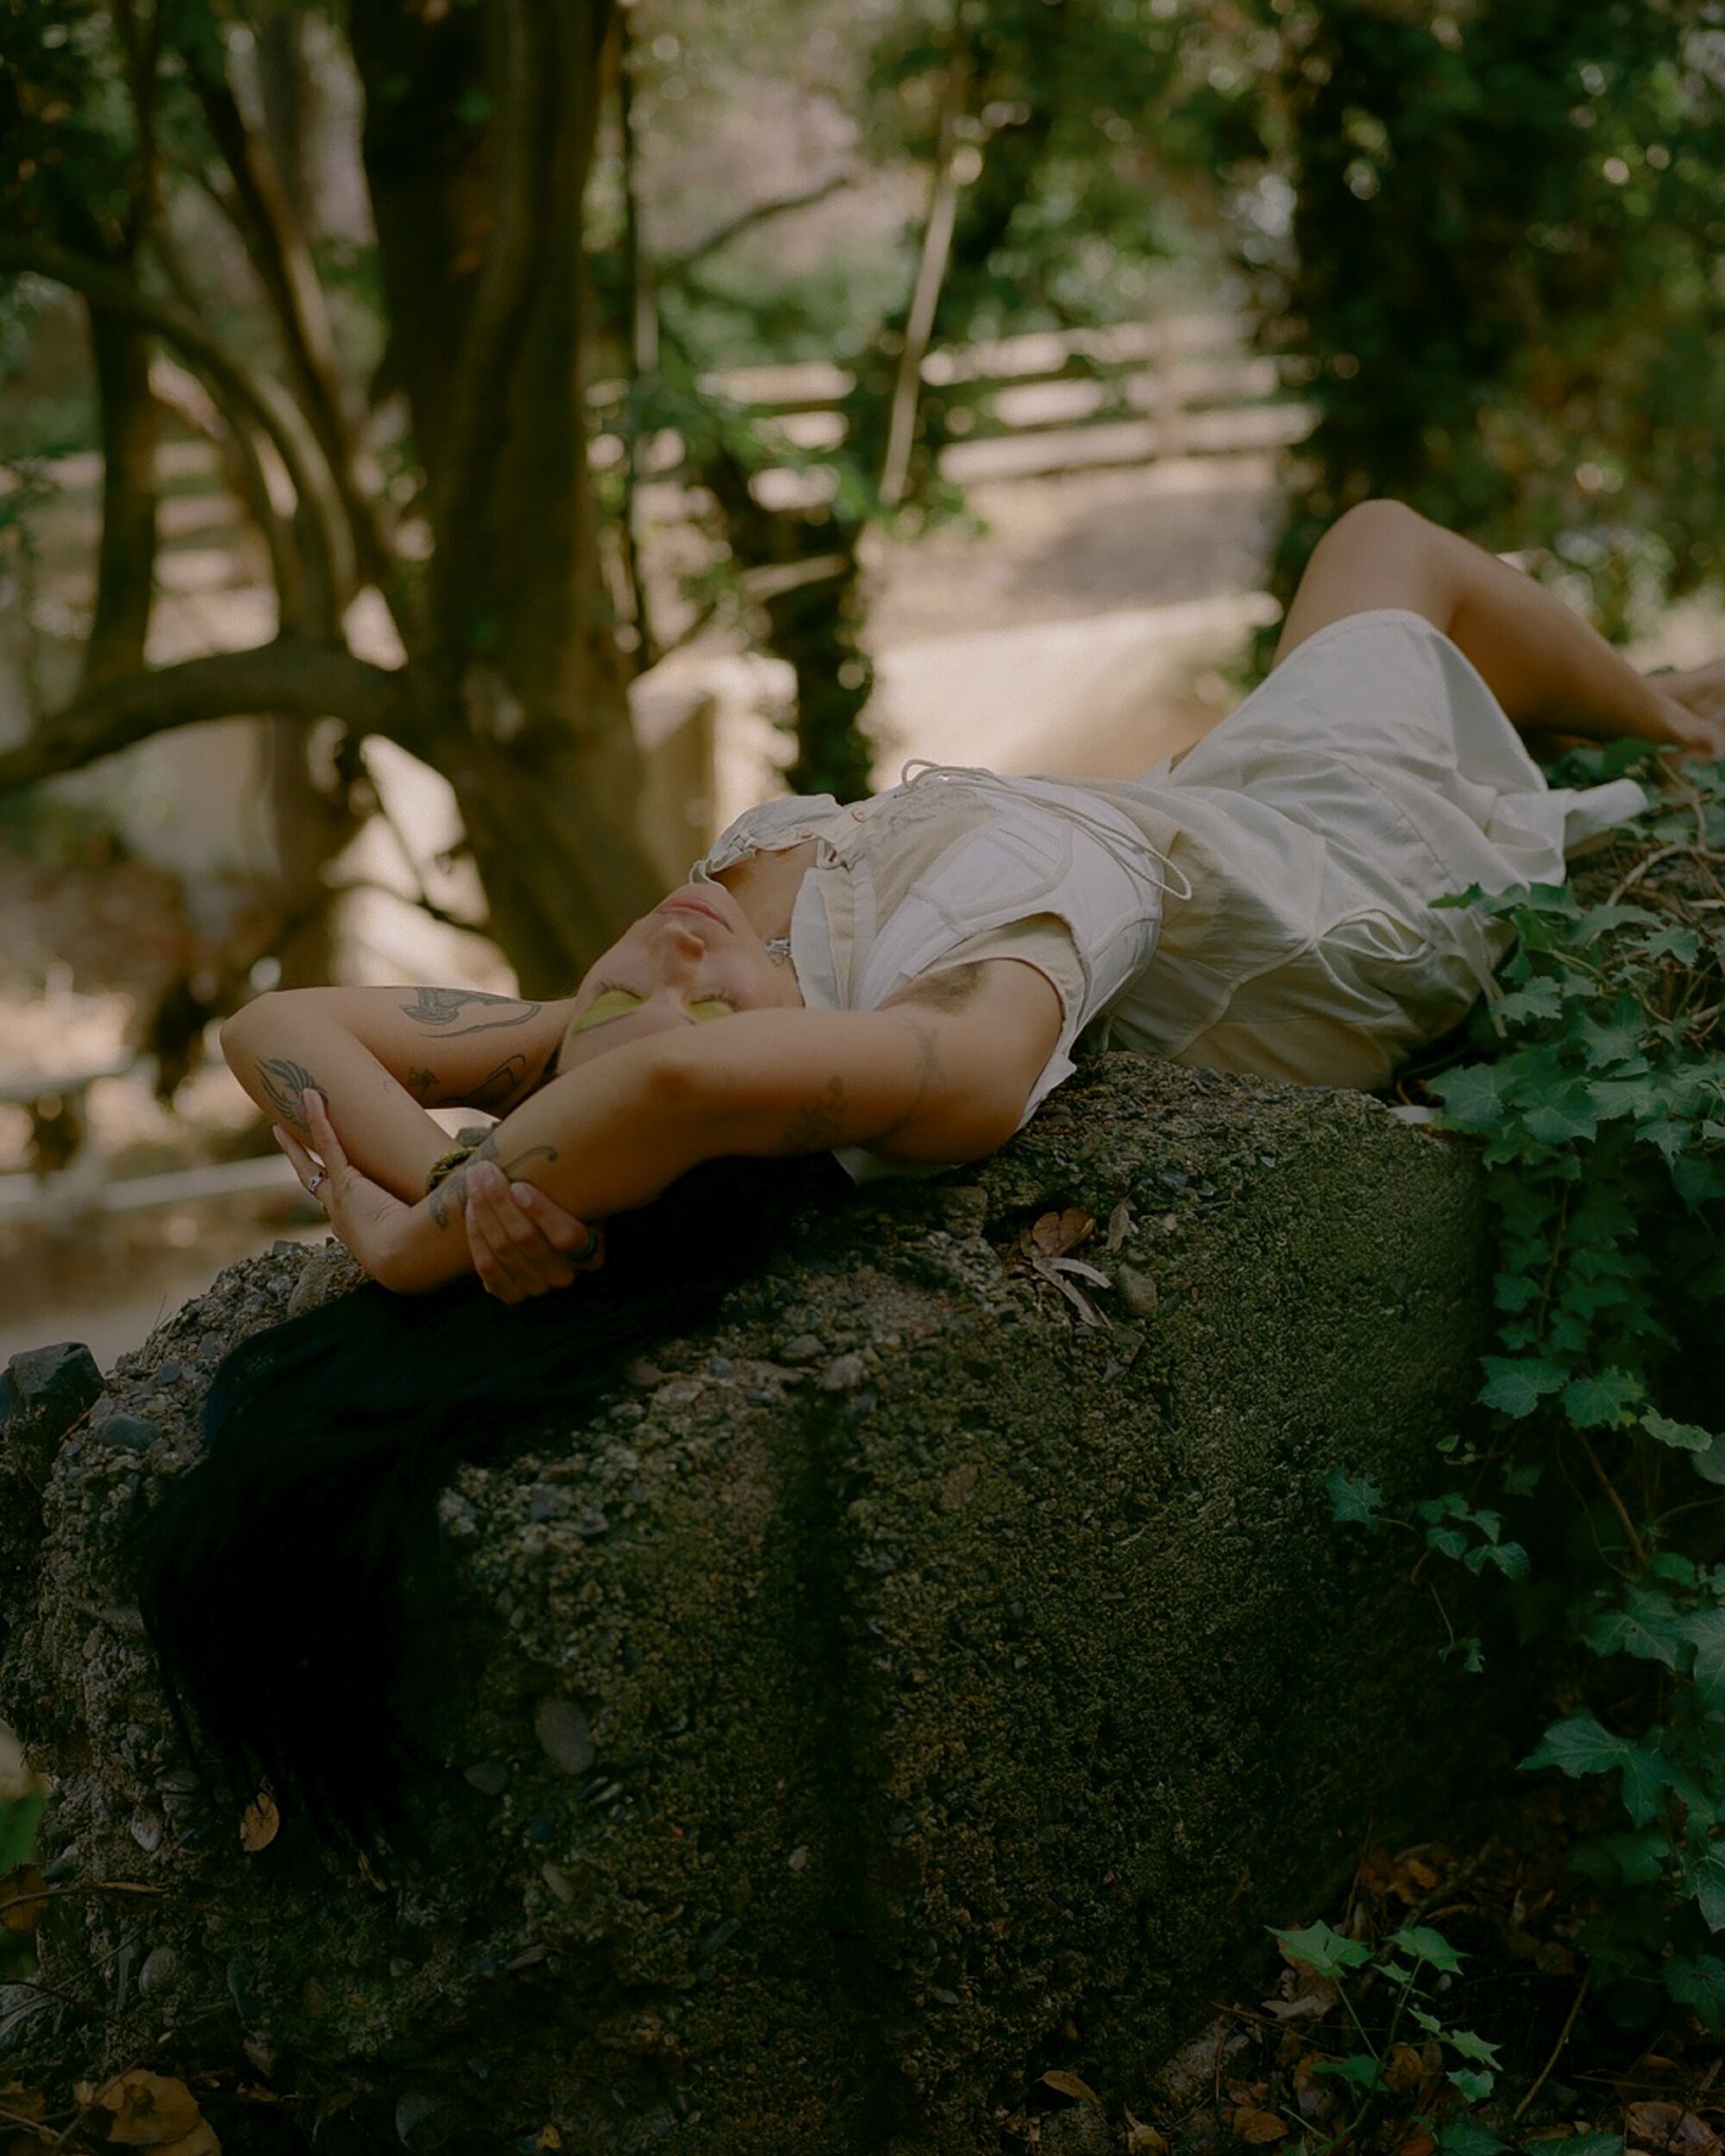 In a white dress, Mia Carucci lies on a concrete block outdoors.